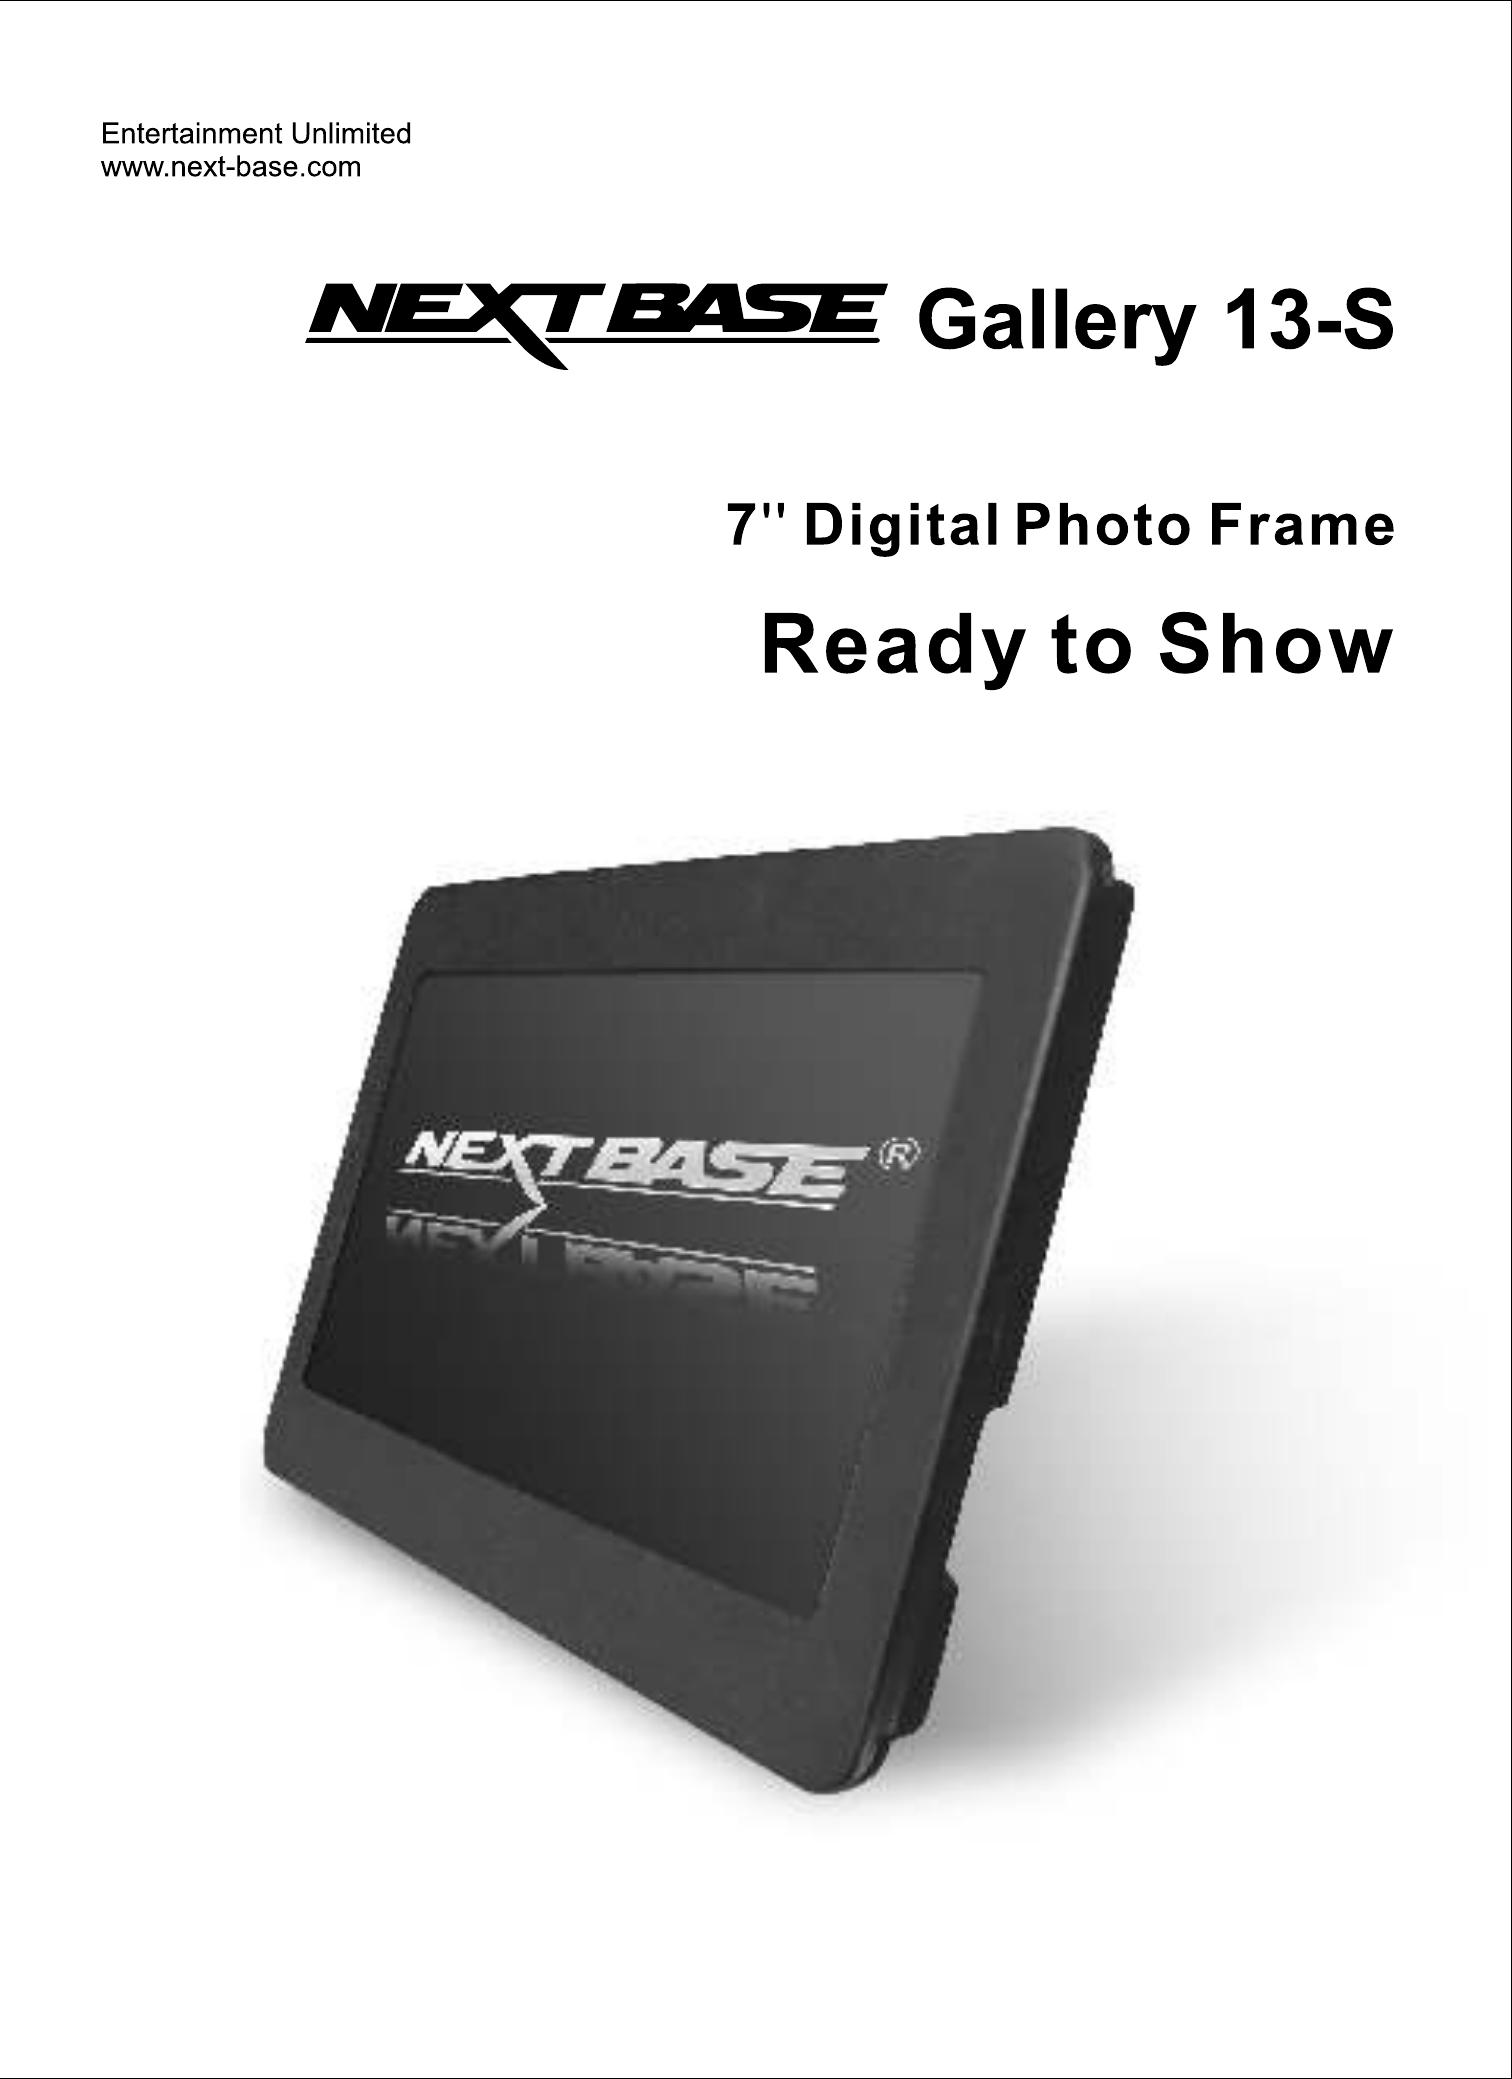 NextBase Gallery 13-S Digital Photo Frame User Manual